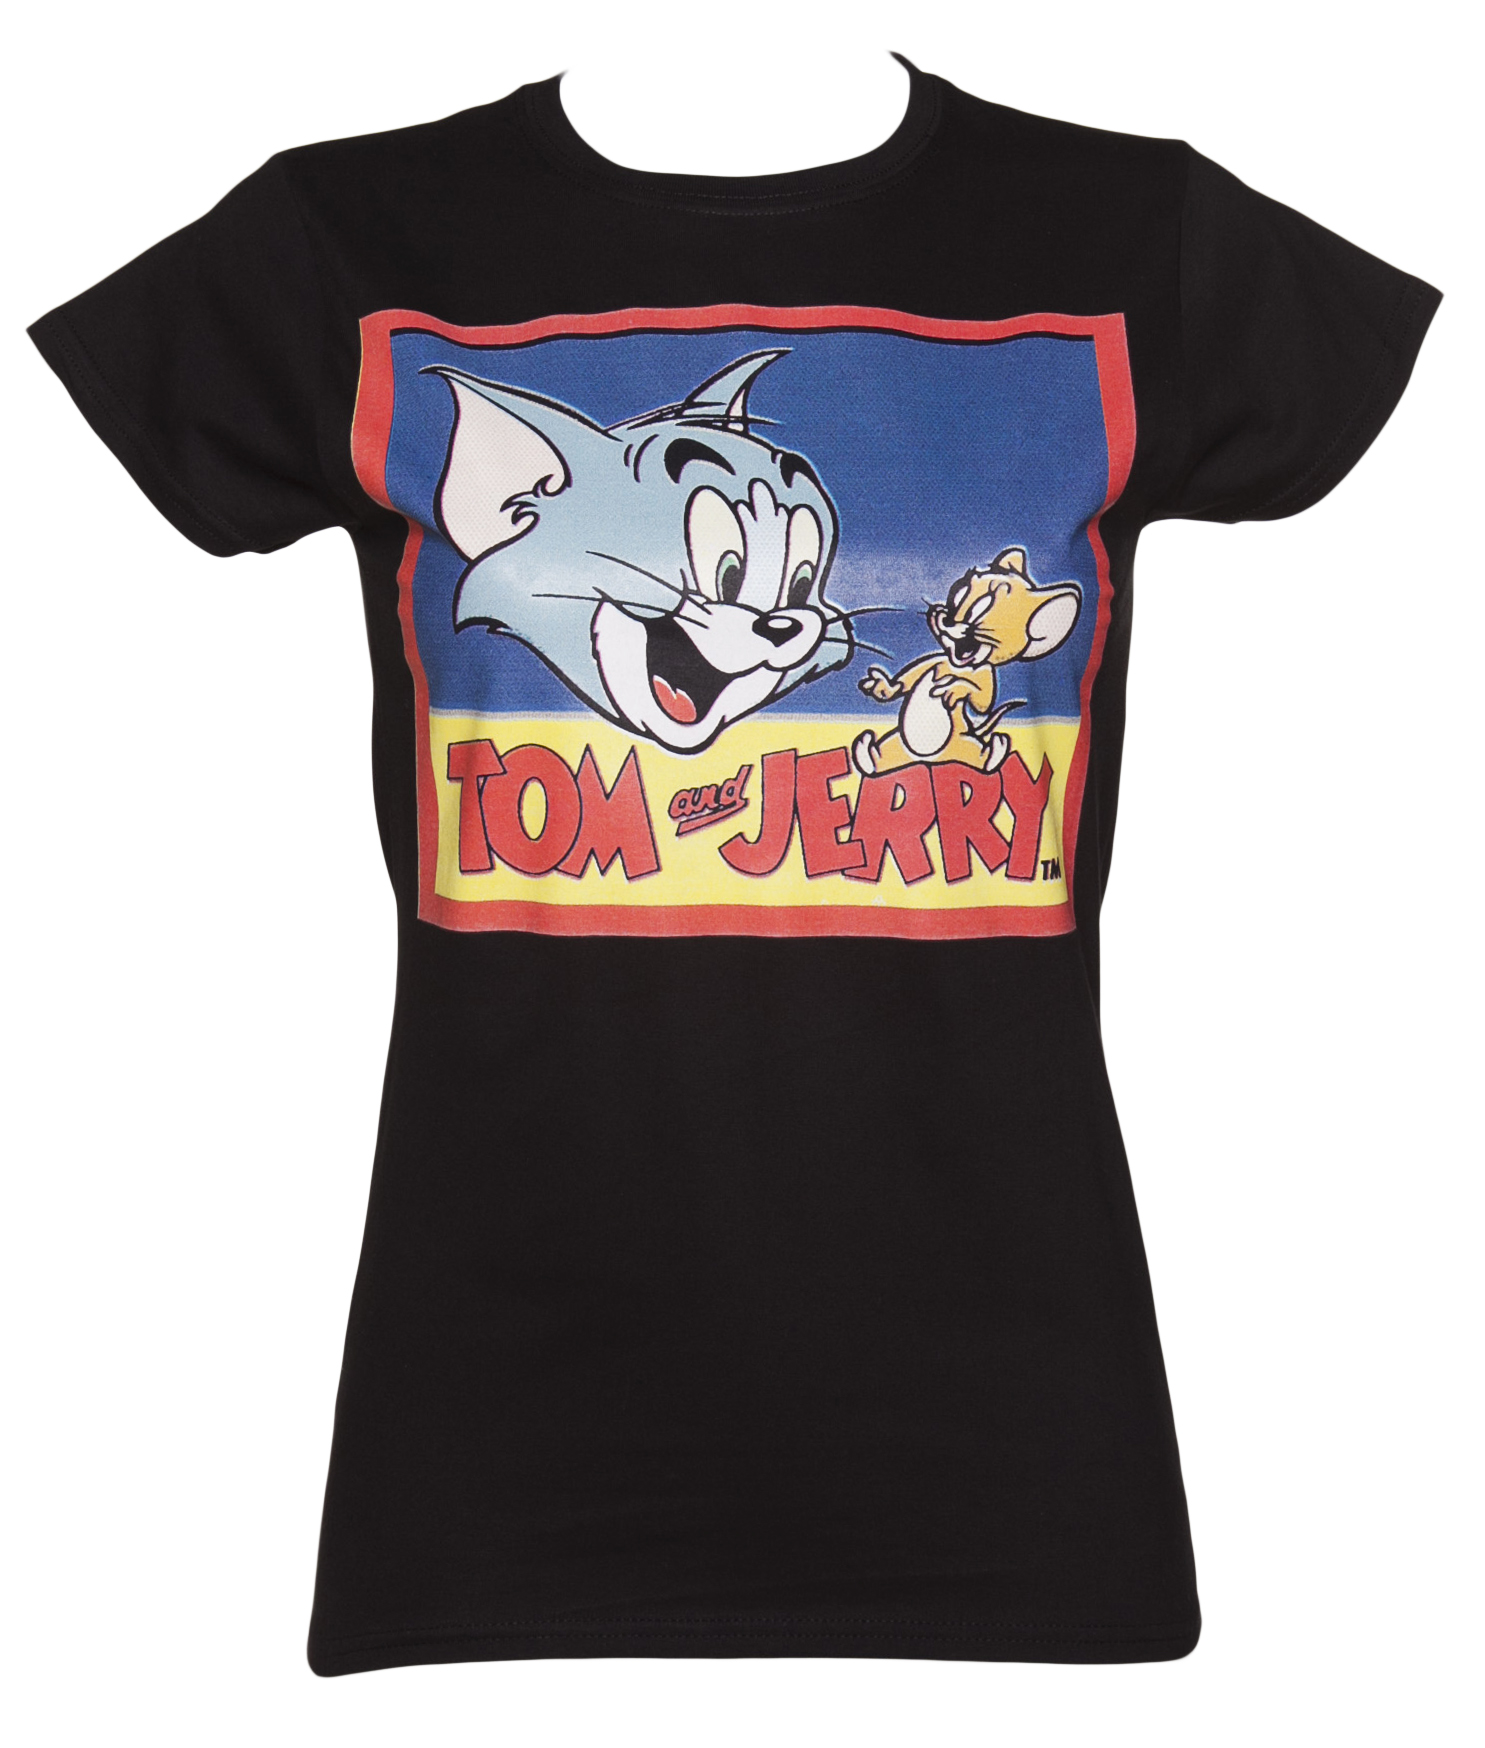 Ladies Black Vintage Print Tom And Jerry T-Shirt